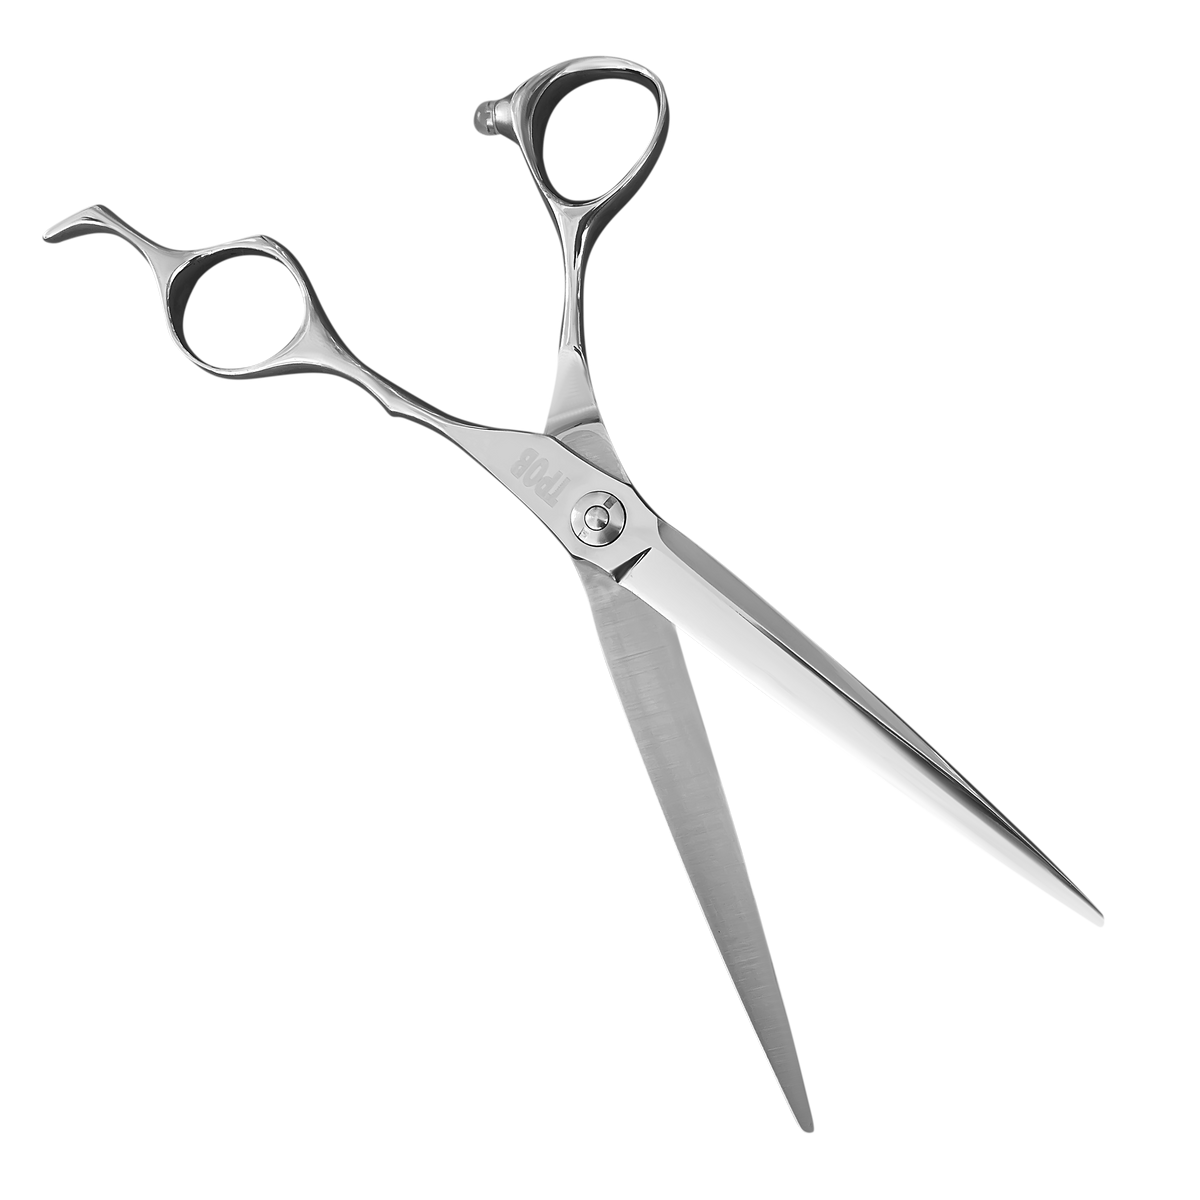 KUTZ 7 (17.8 cm) Industrial Scissors | Black Plastic Oversized Handles |  Super Sharp Stainless Steel Blades | Versatile and Professional